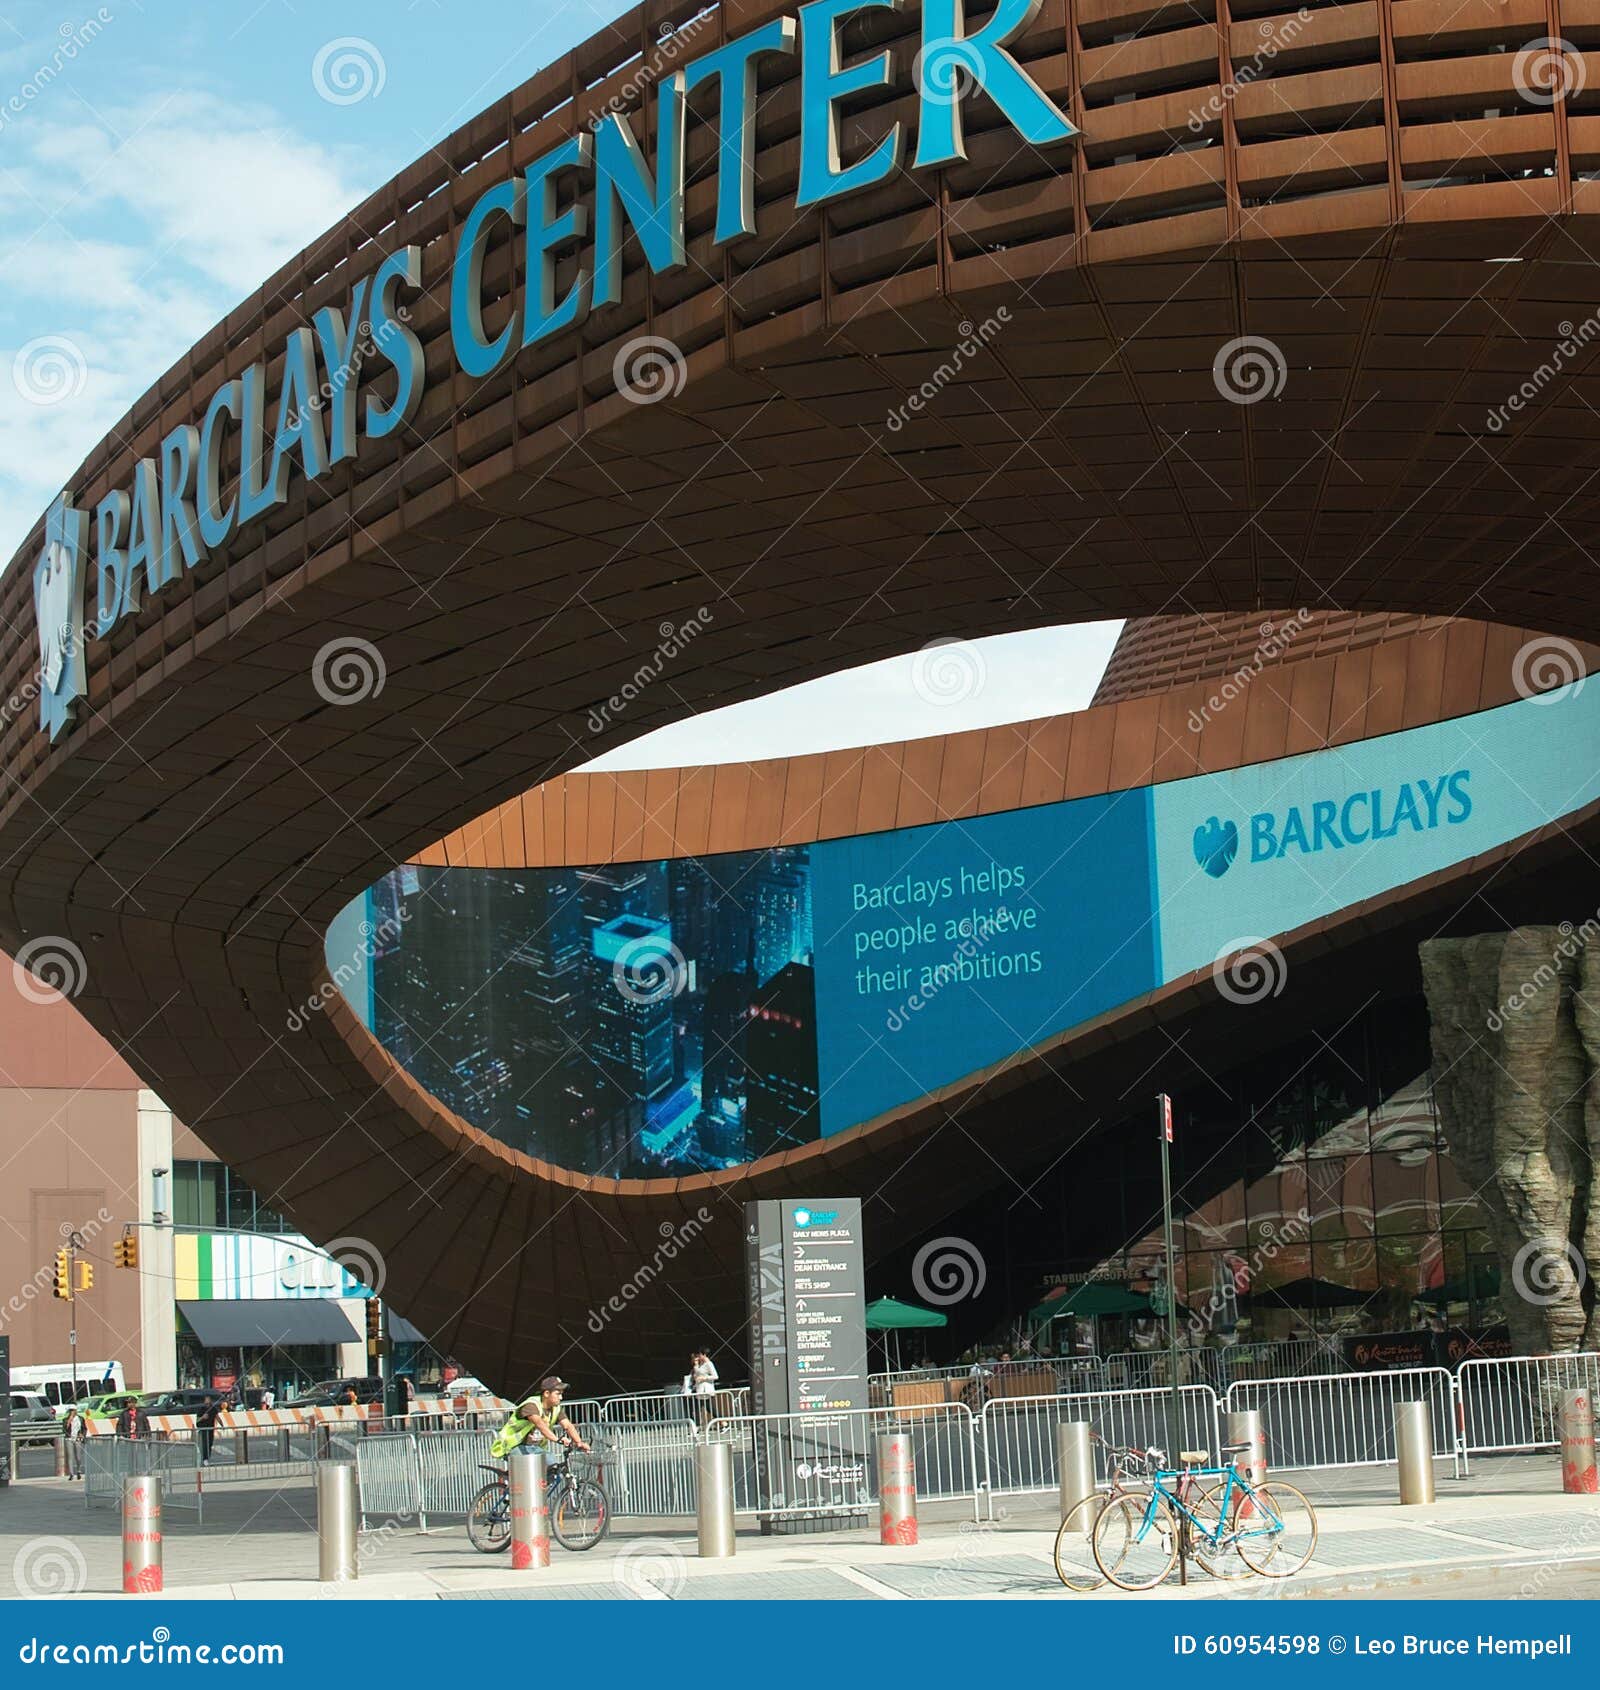 New York Islanders in Barclays Center